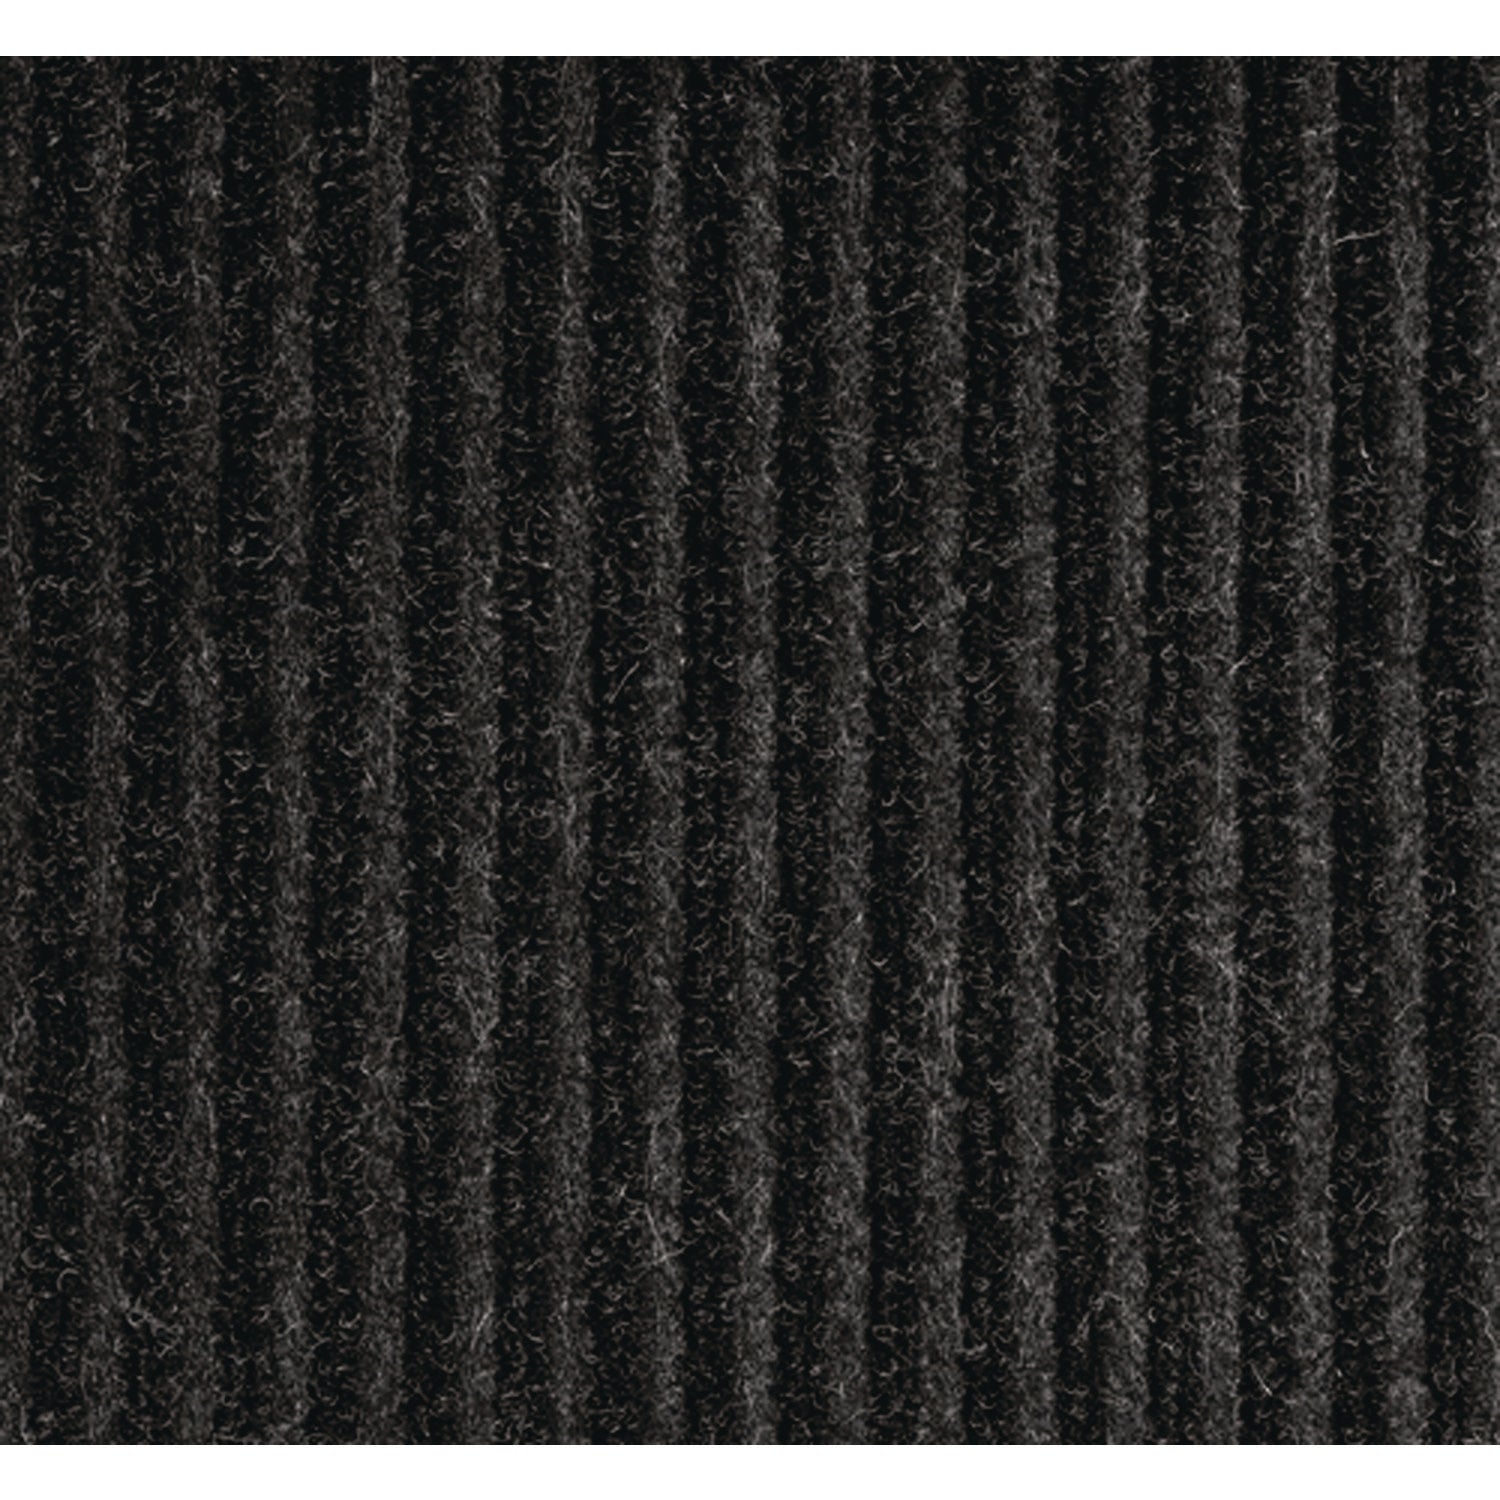 Needle-Rib Wiper/Scraper Mat, Polypropylene, 36 x 48, Charcoal - 4